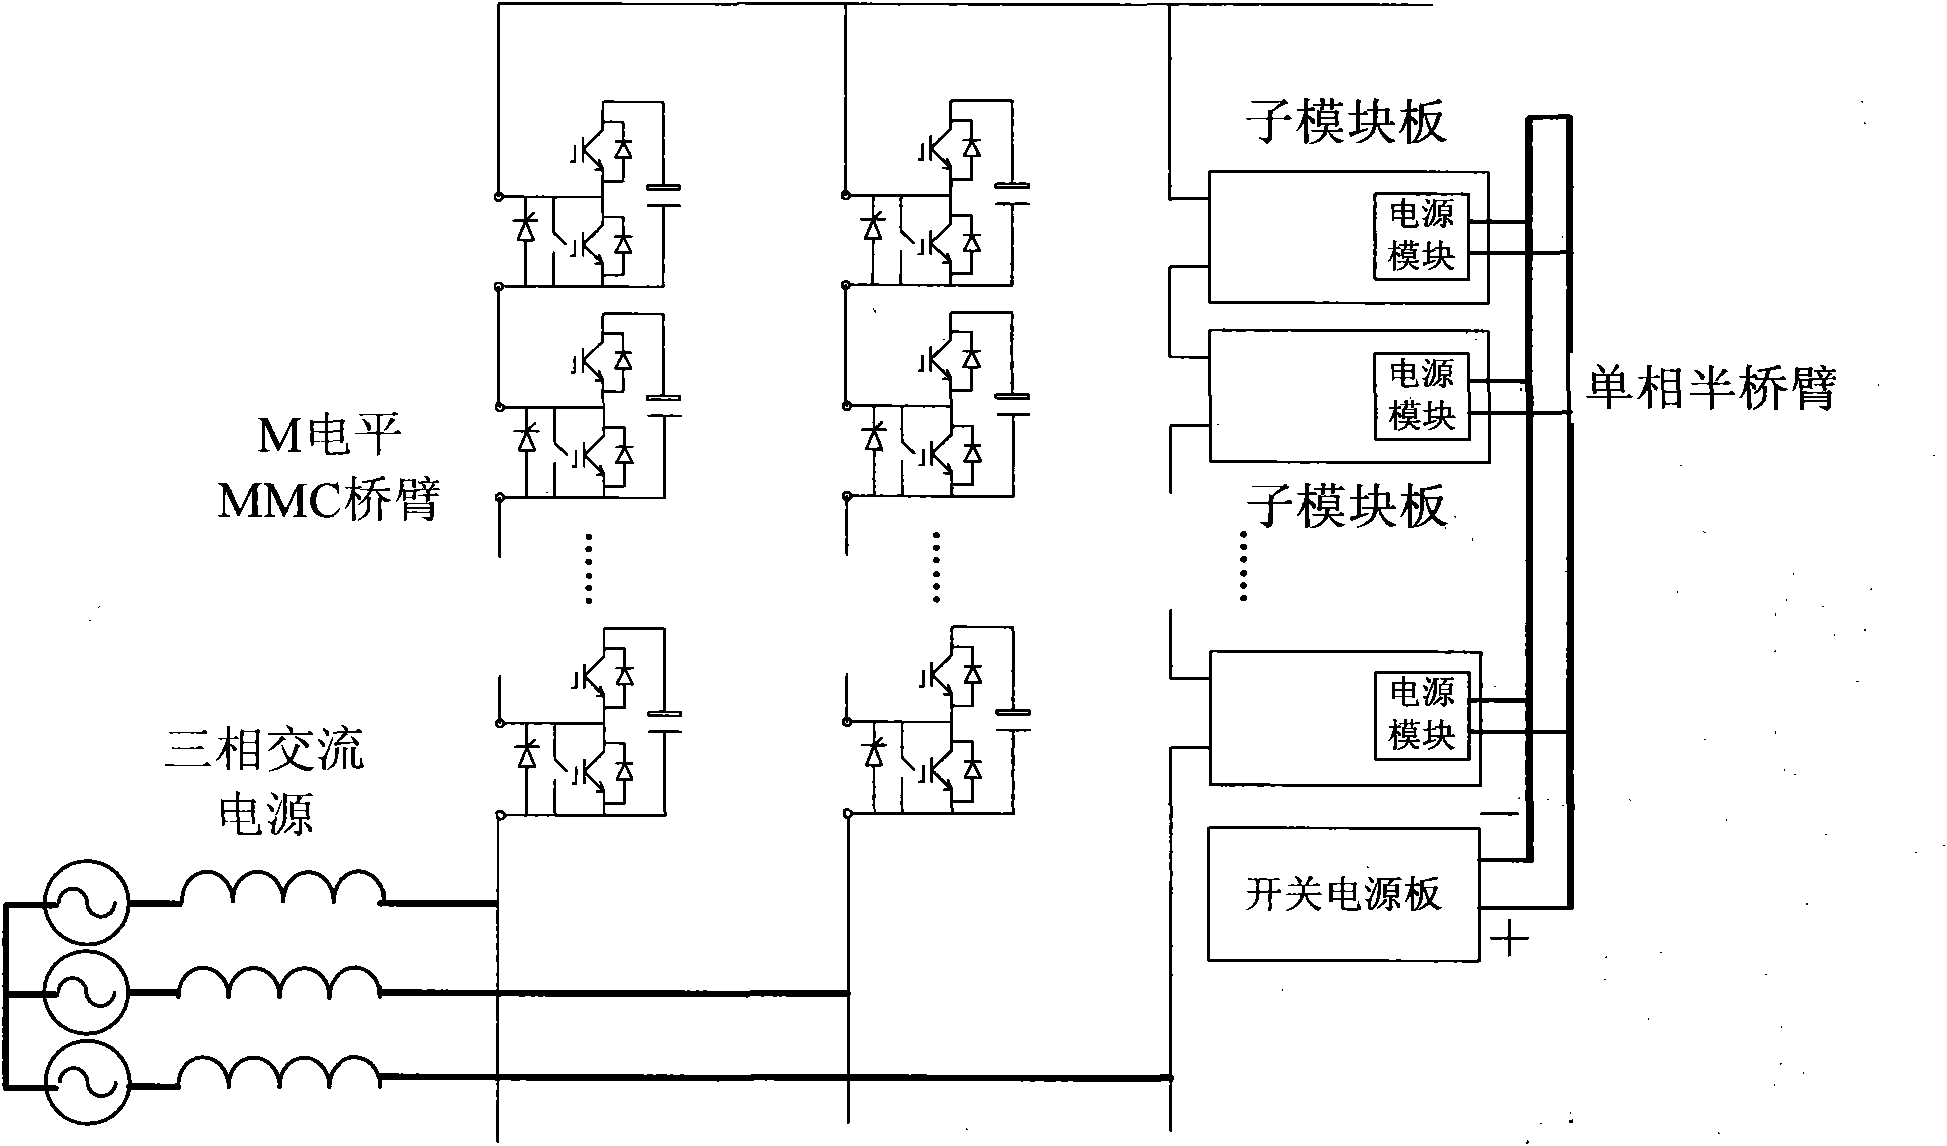 Integrated control sub-module board for simulating multi-level modular converter (MMC) sub-module